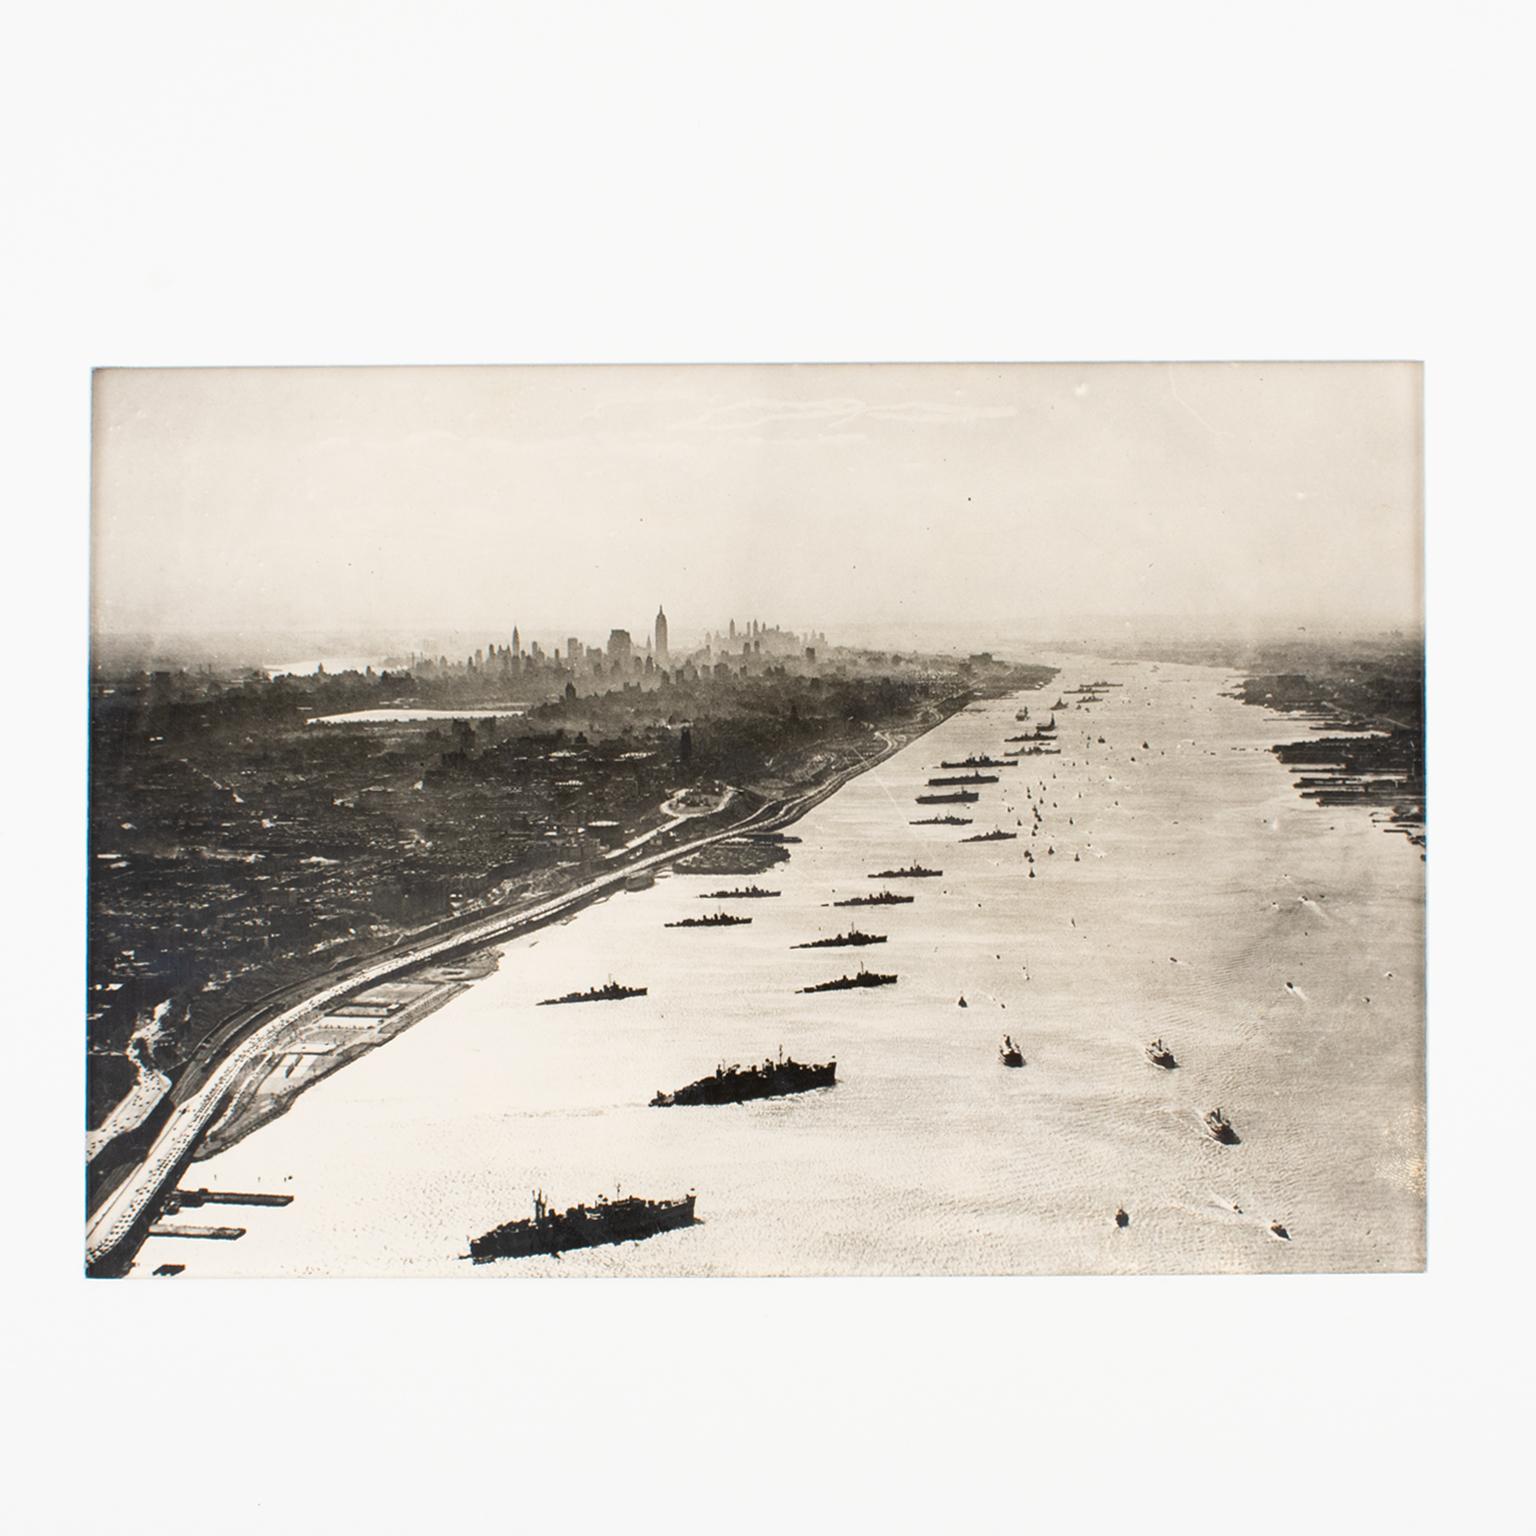 Hudson River, New York Navy Day 1945, photographie encadrée en vente 2